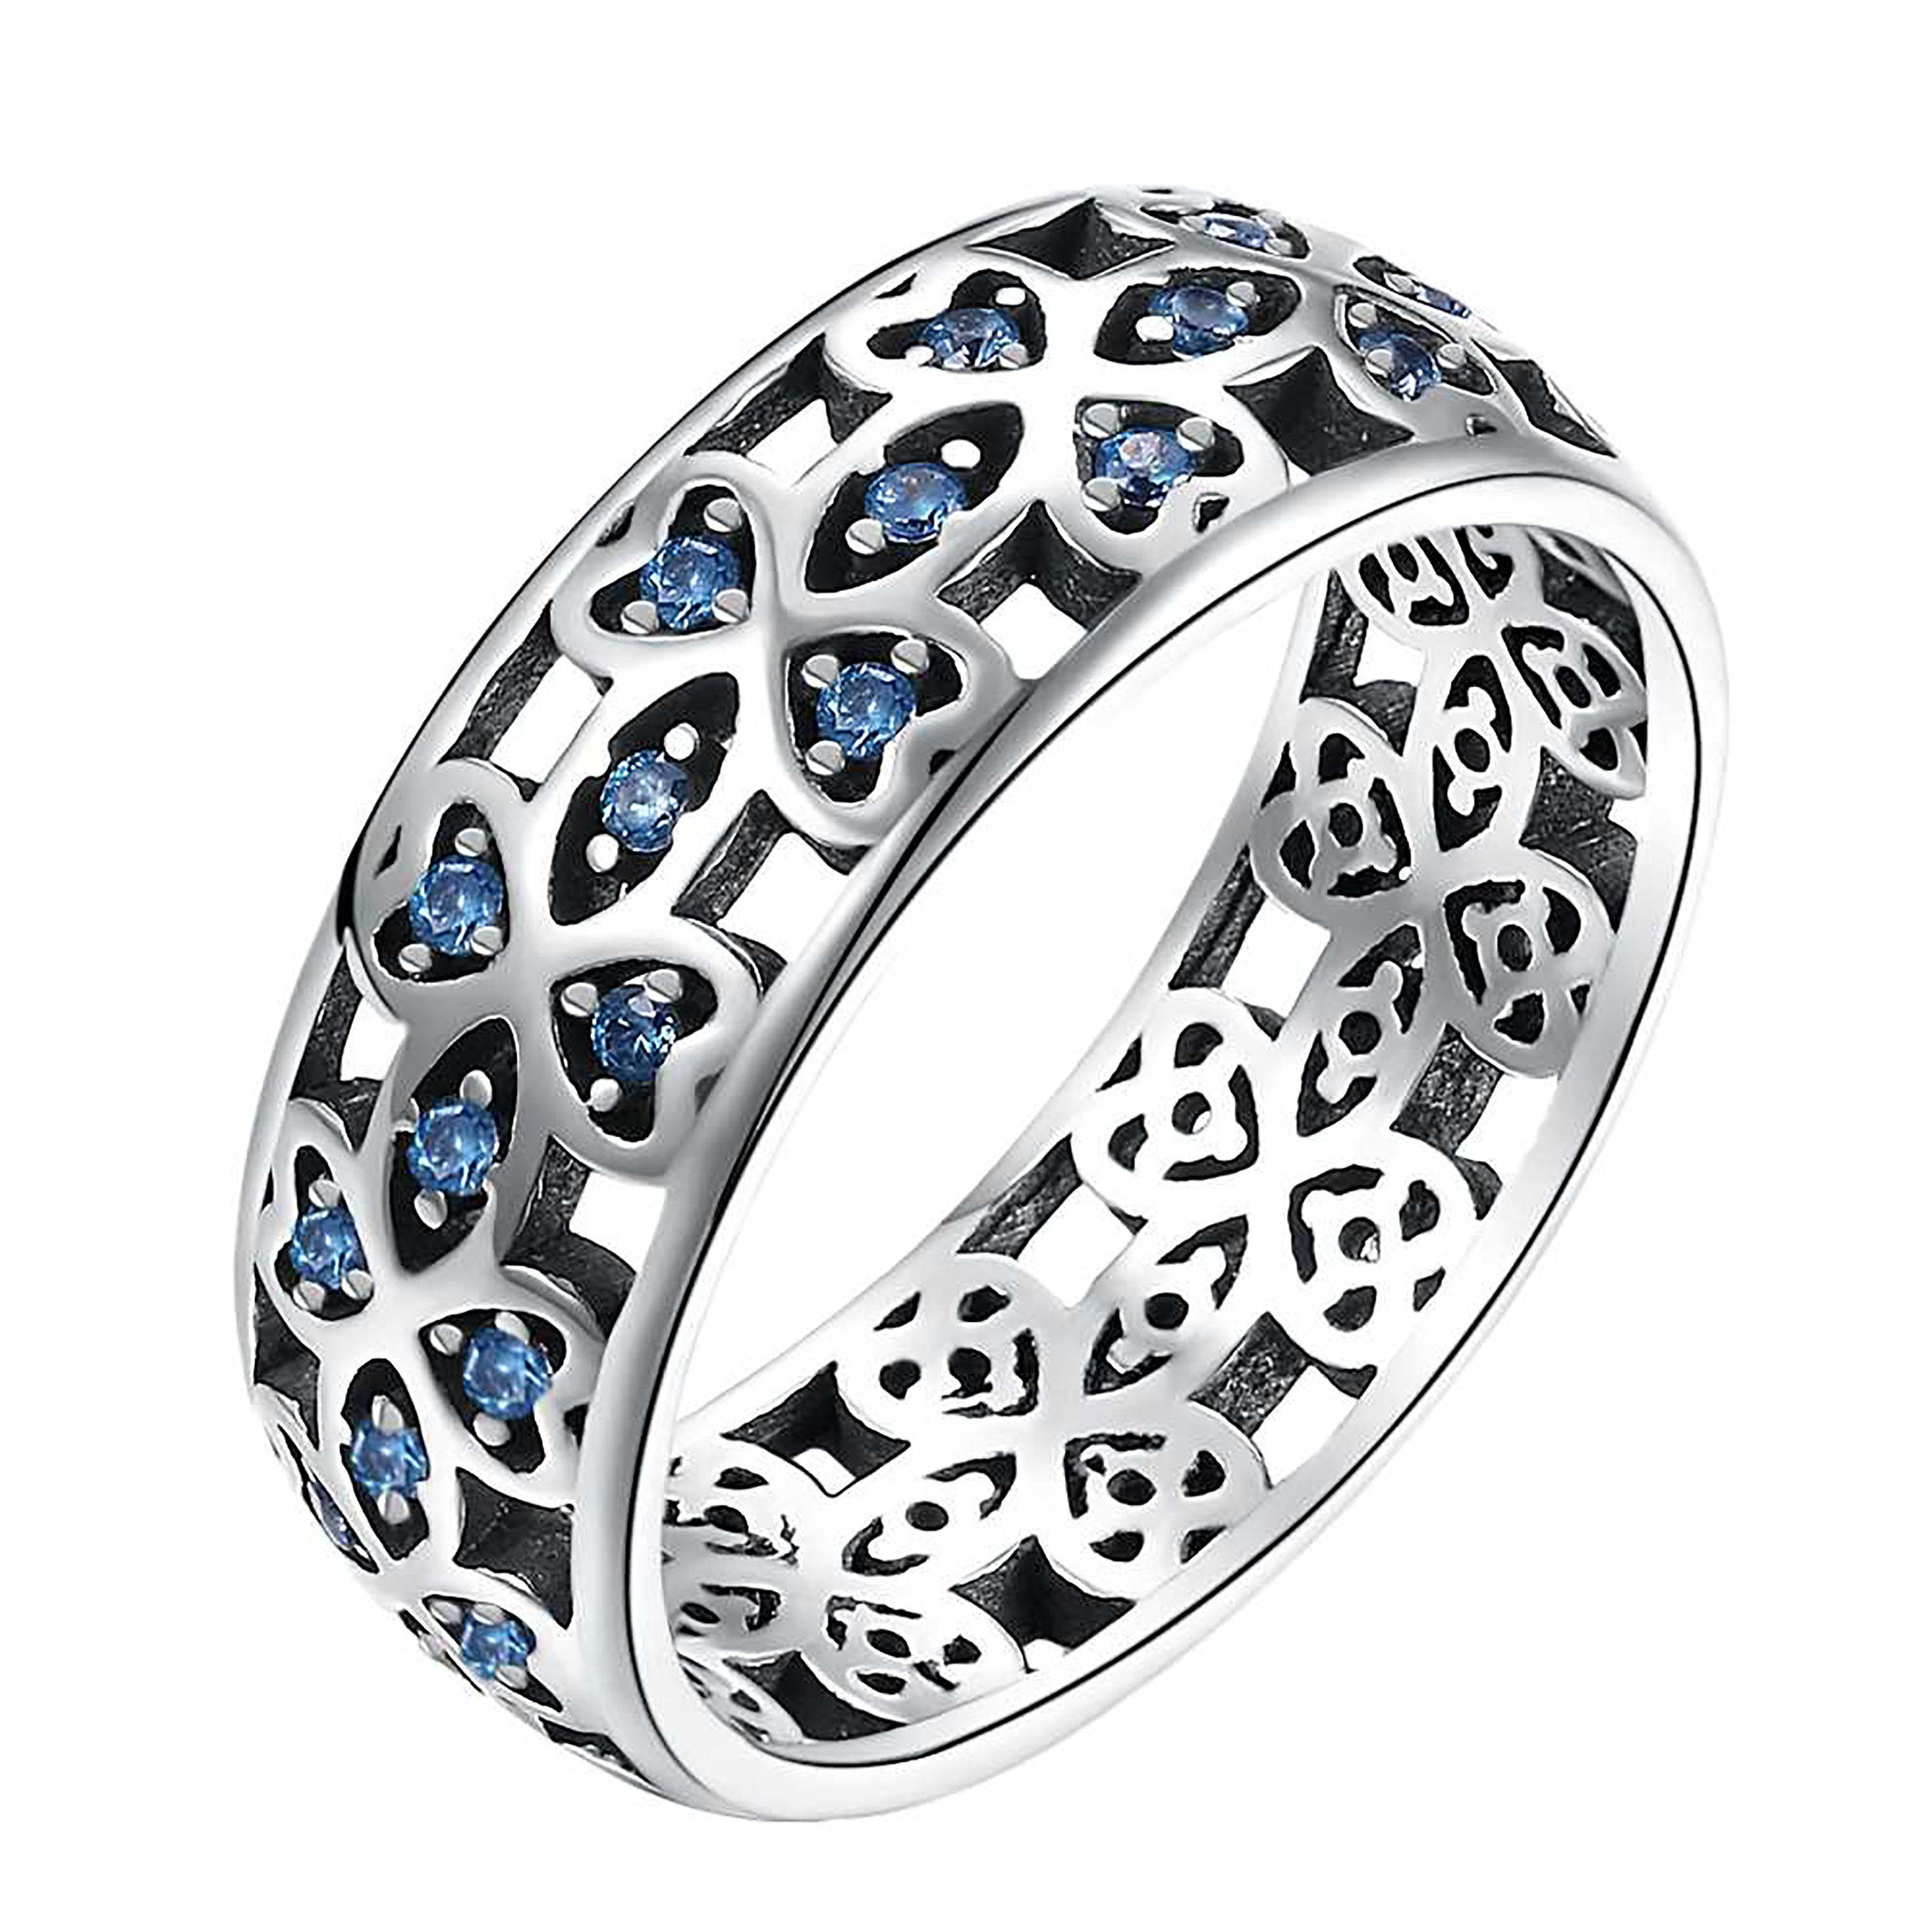 Tapferer Ping Fingerring Kreativer Ring mit blauem Zirkon